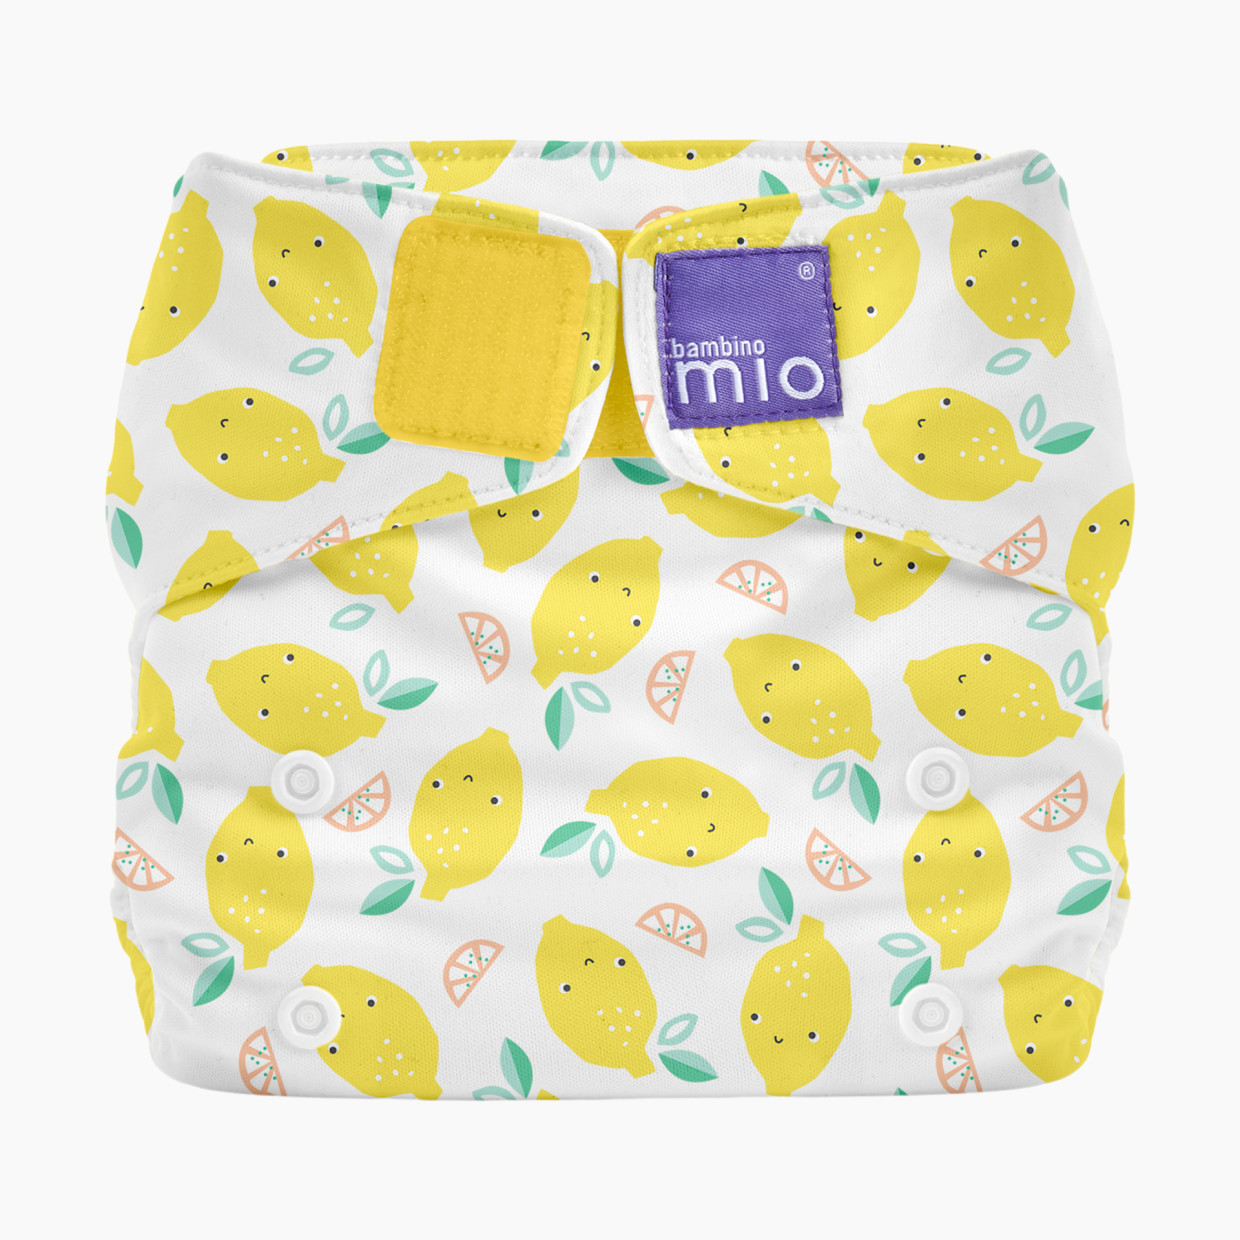 Bambino Mio Miosolo Classic Cloth Diaper - Lemon Drop, One Size (8-35 Lbs).